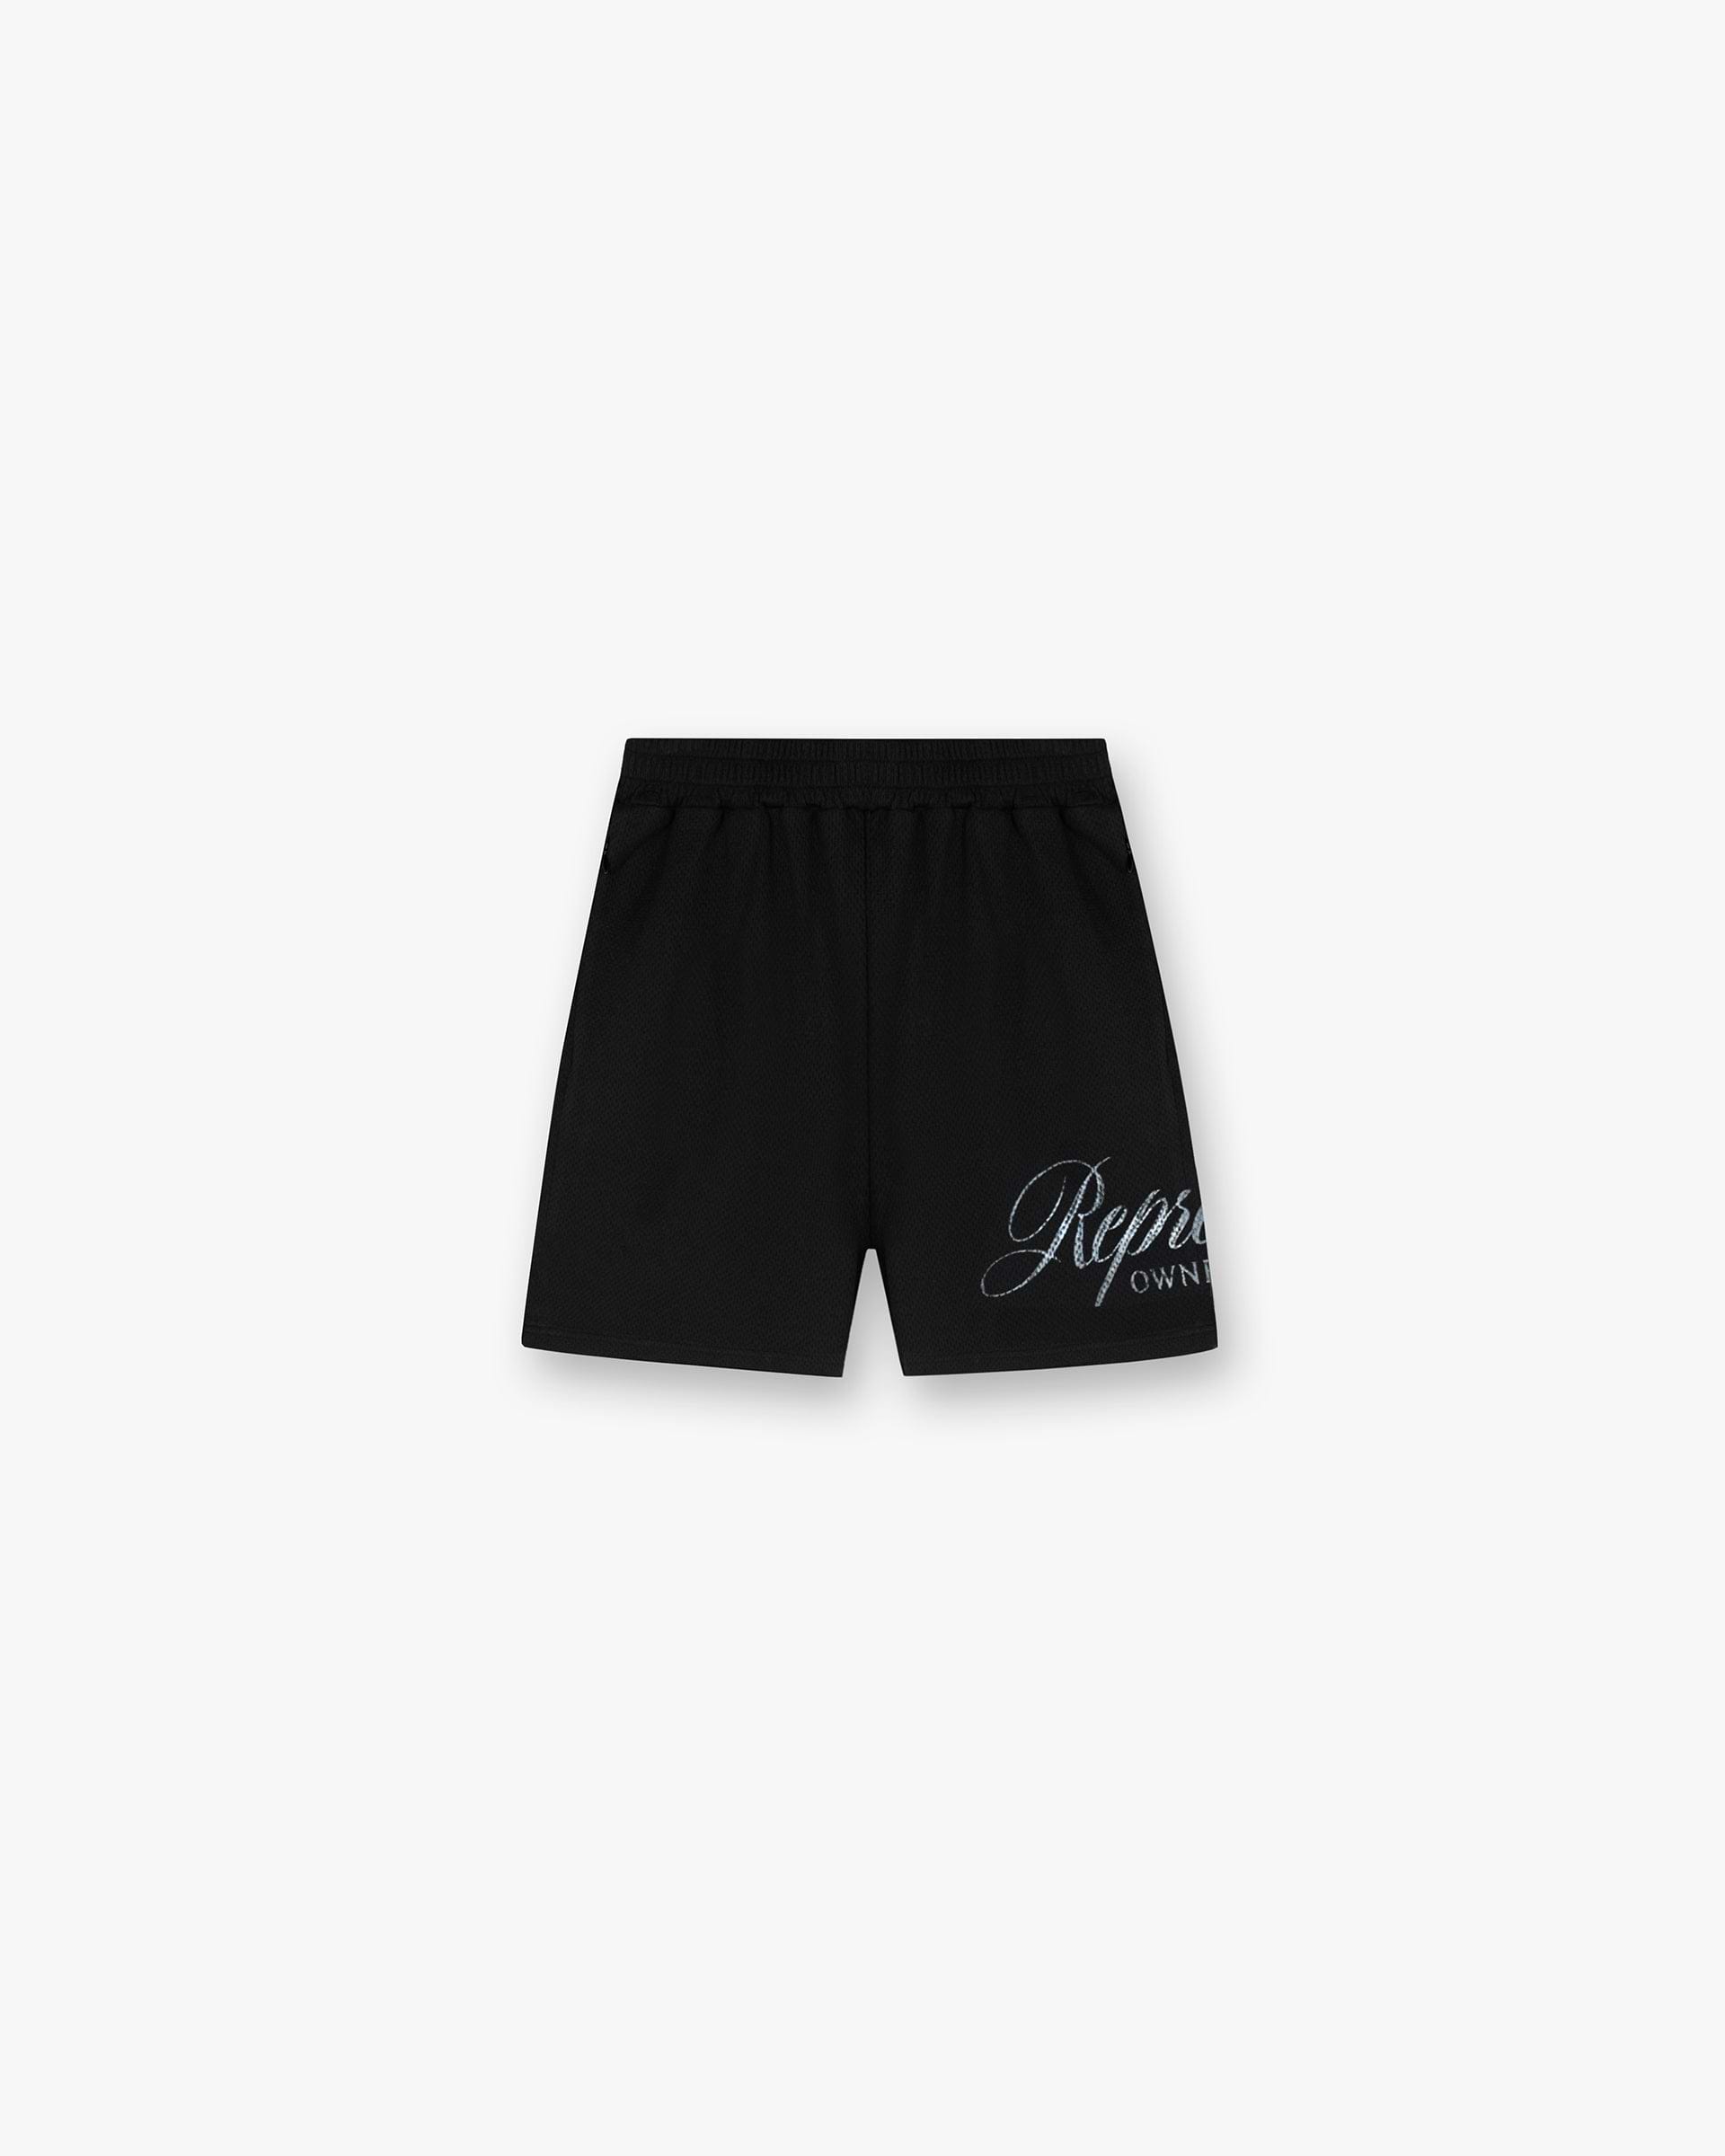 Represent Owners Club Script Mesh Shorts - Black